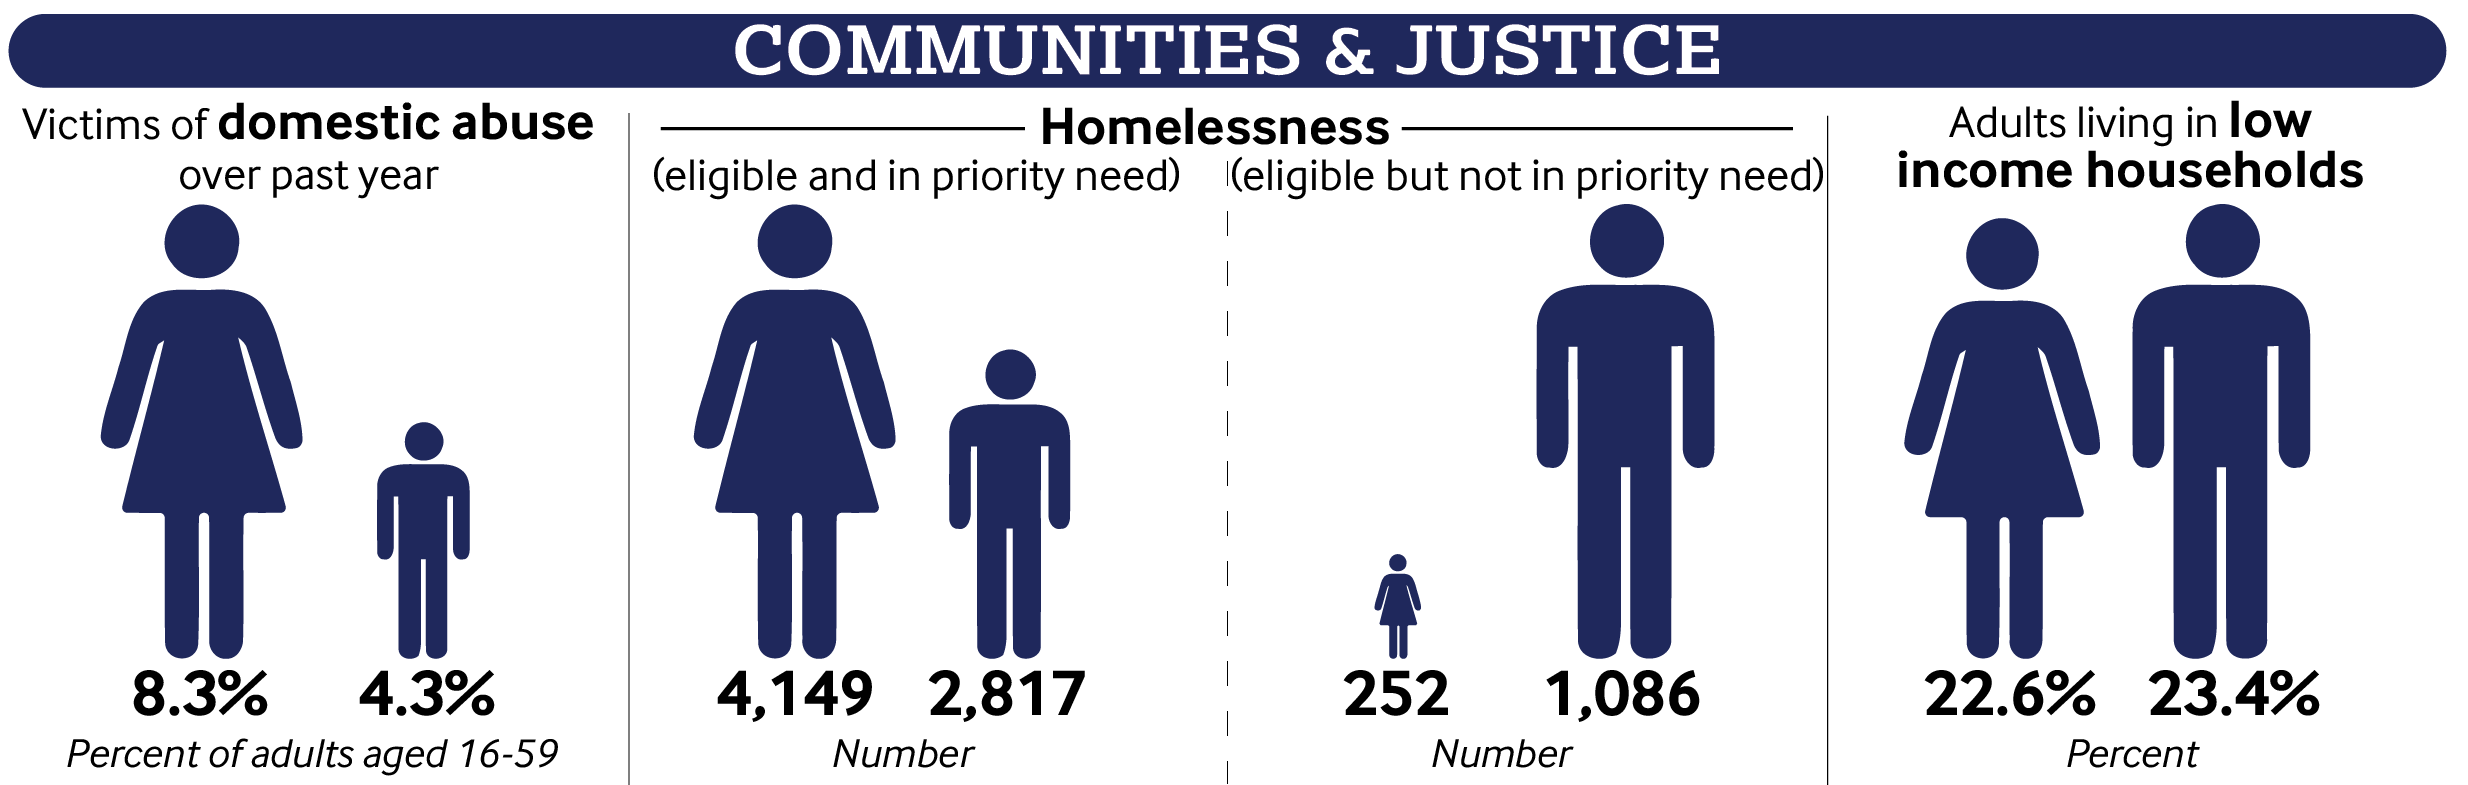 gender-indicators-communities